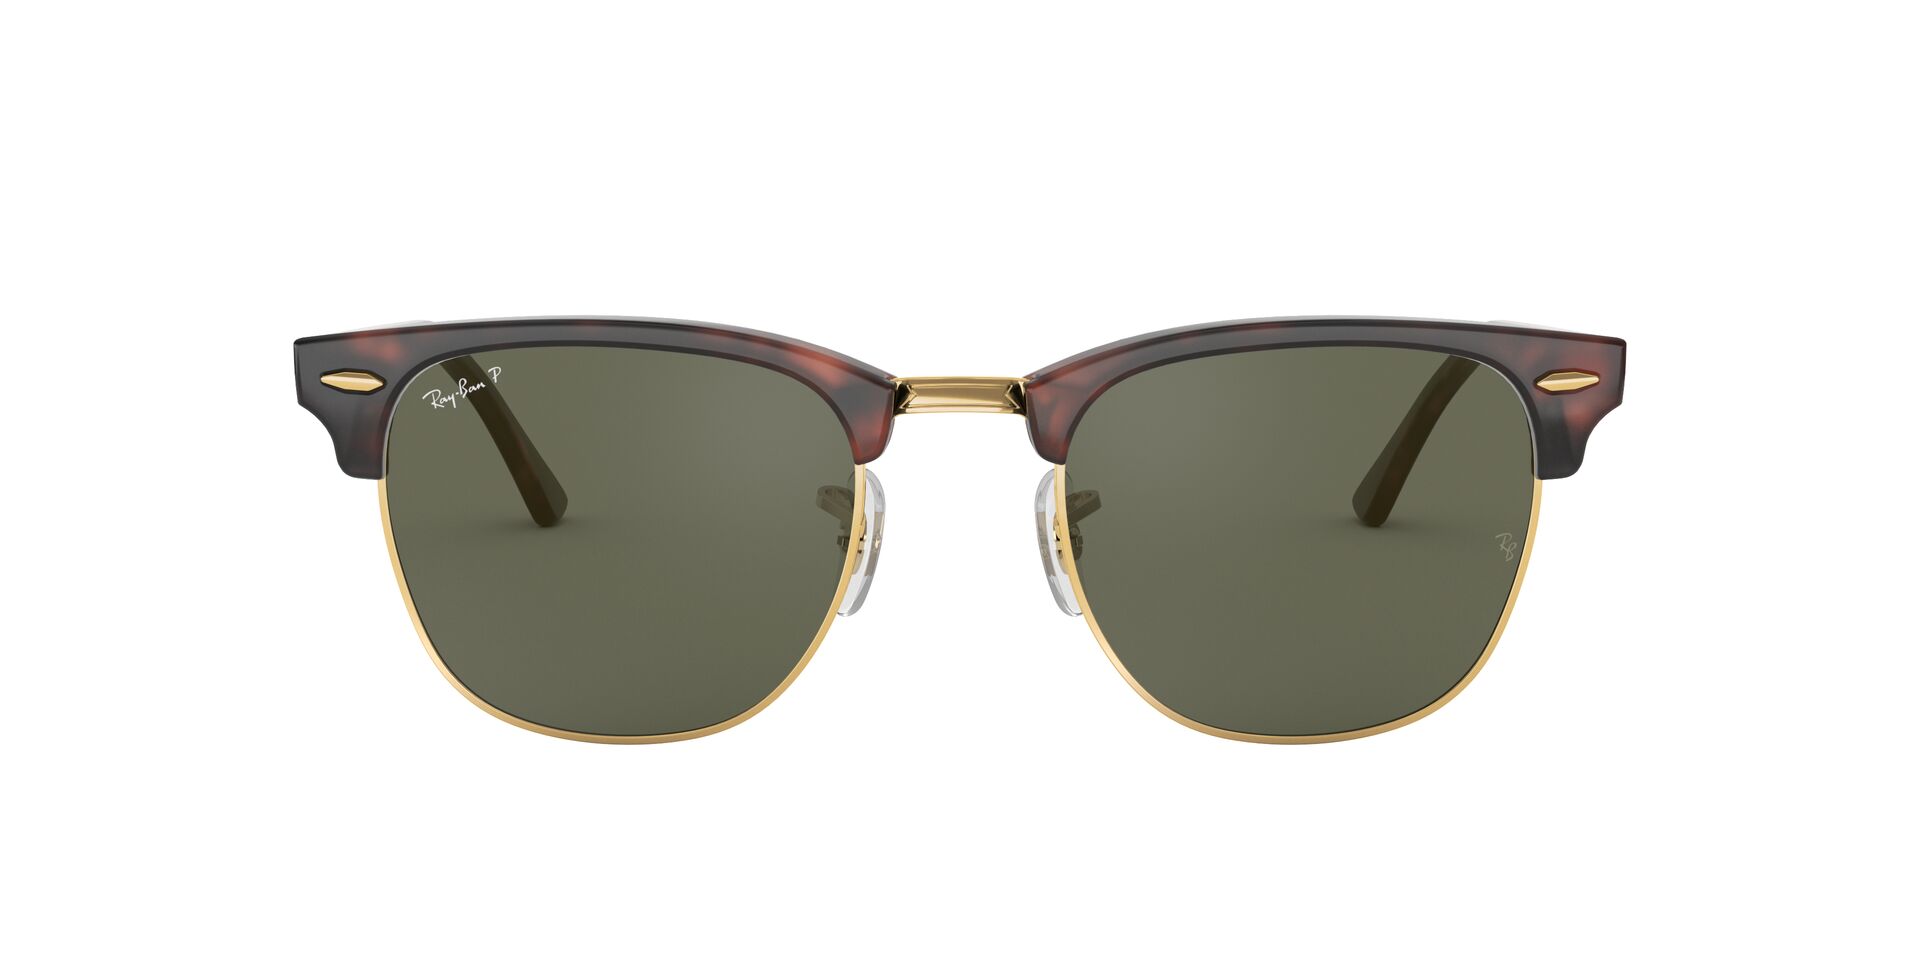 New Ray Ban Sunglasses CLUBMASTER OVERSIZED RB 4175 877 Matte Black Frame |  eBay